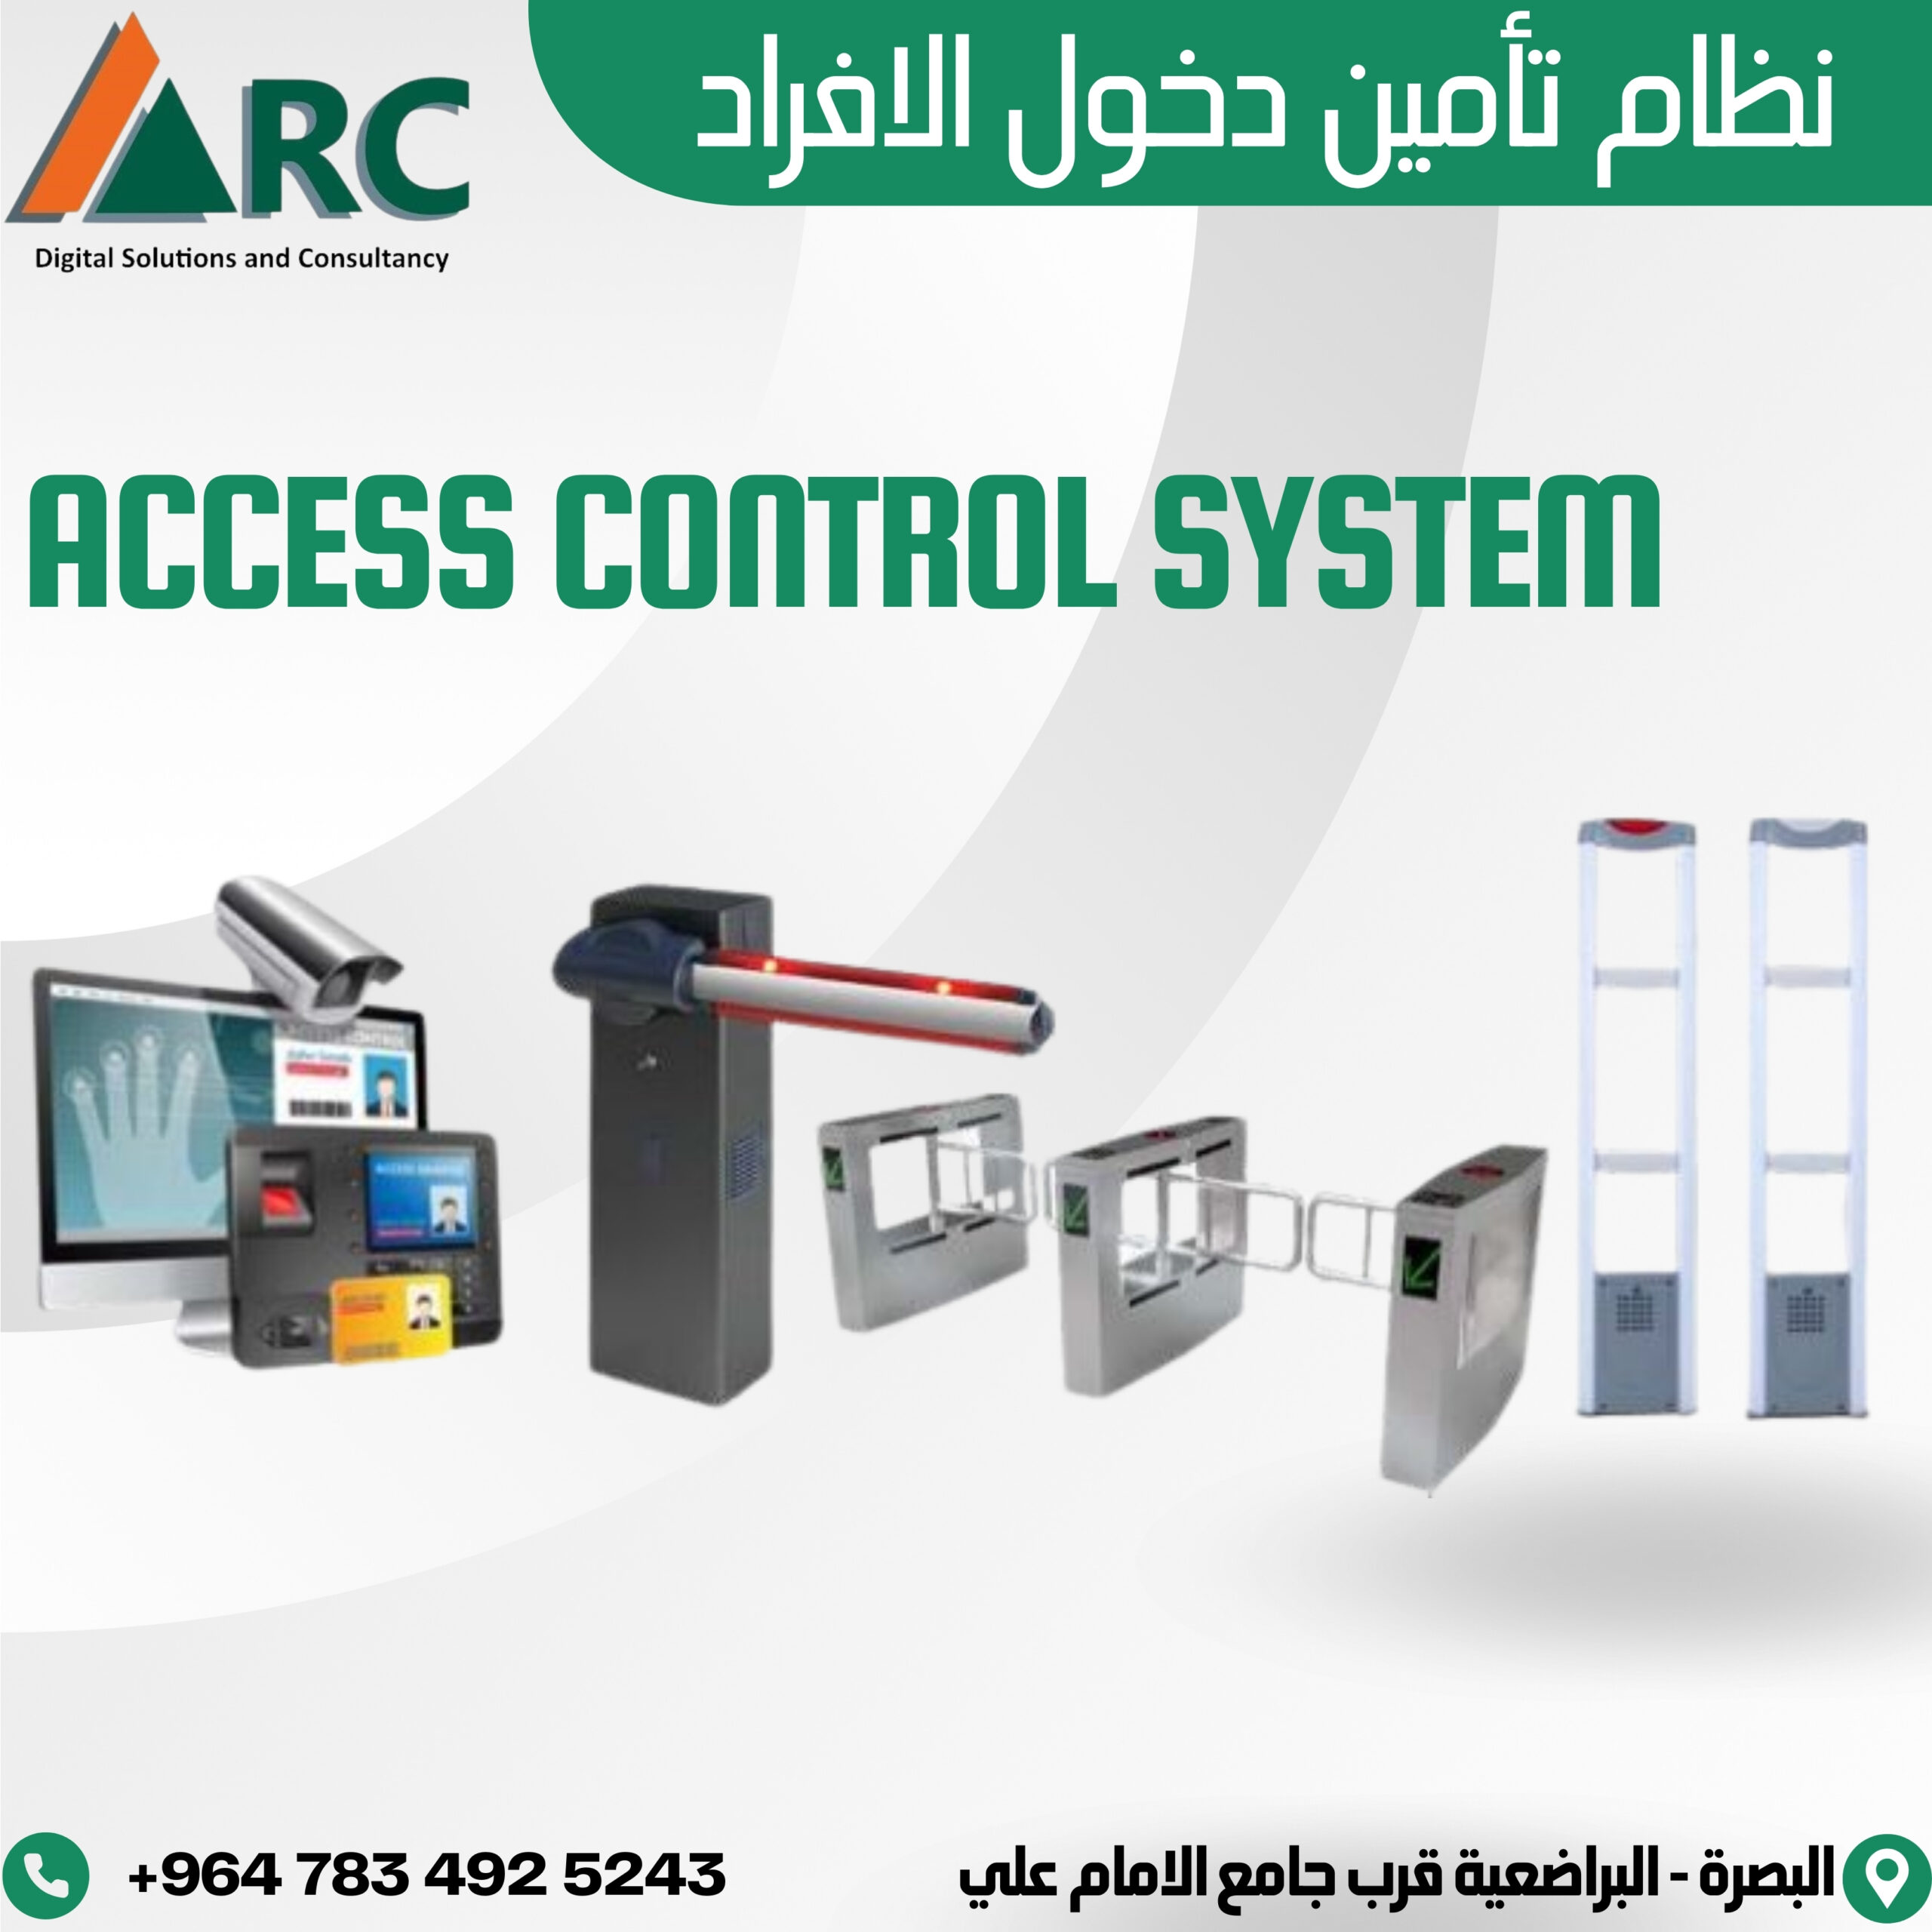 ACCESS CONTROL SYSTEM (ACS)